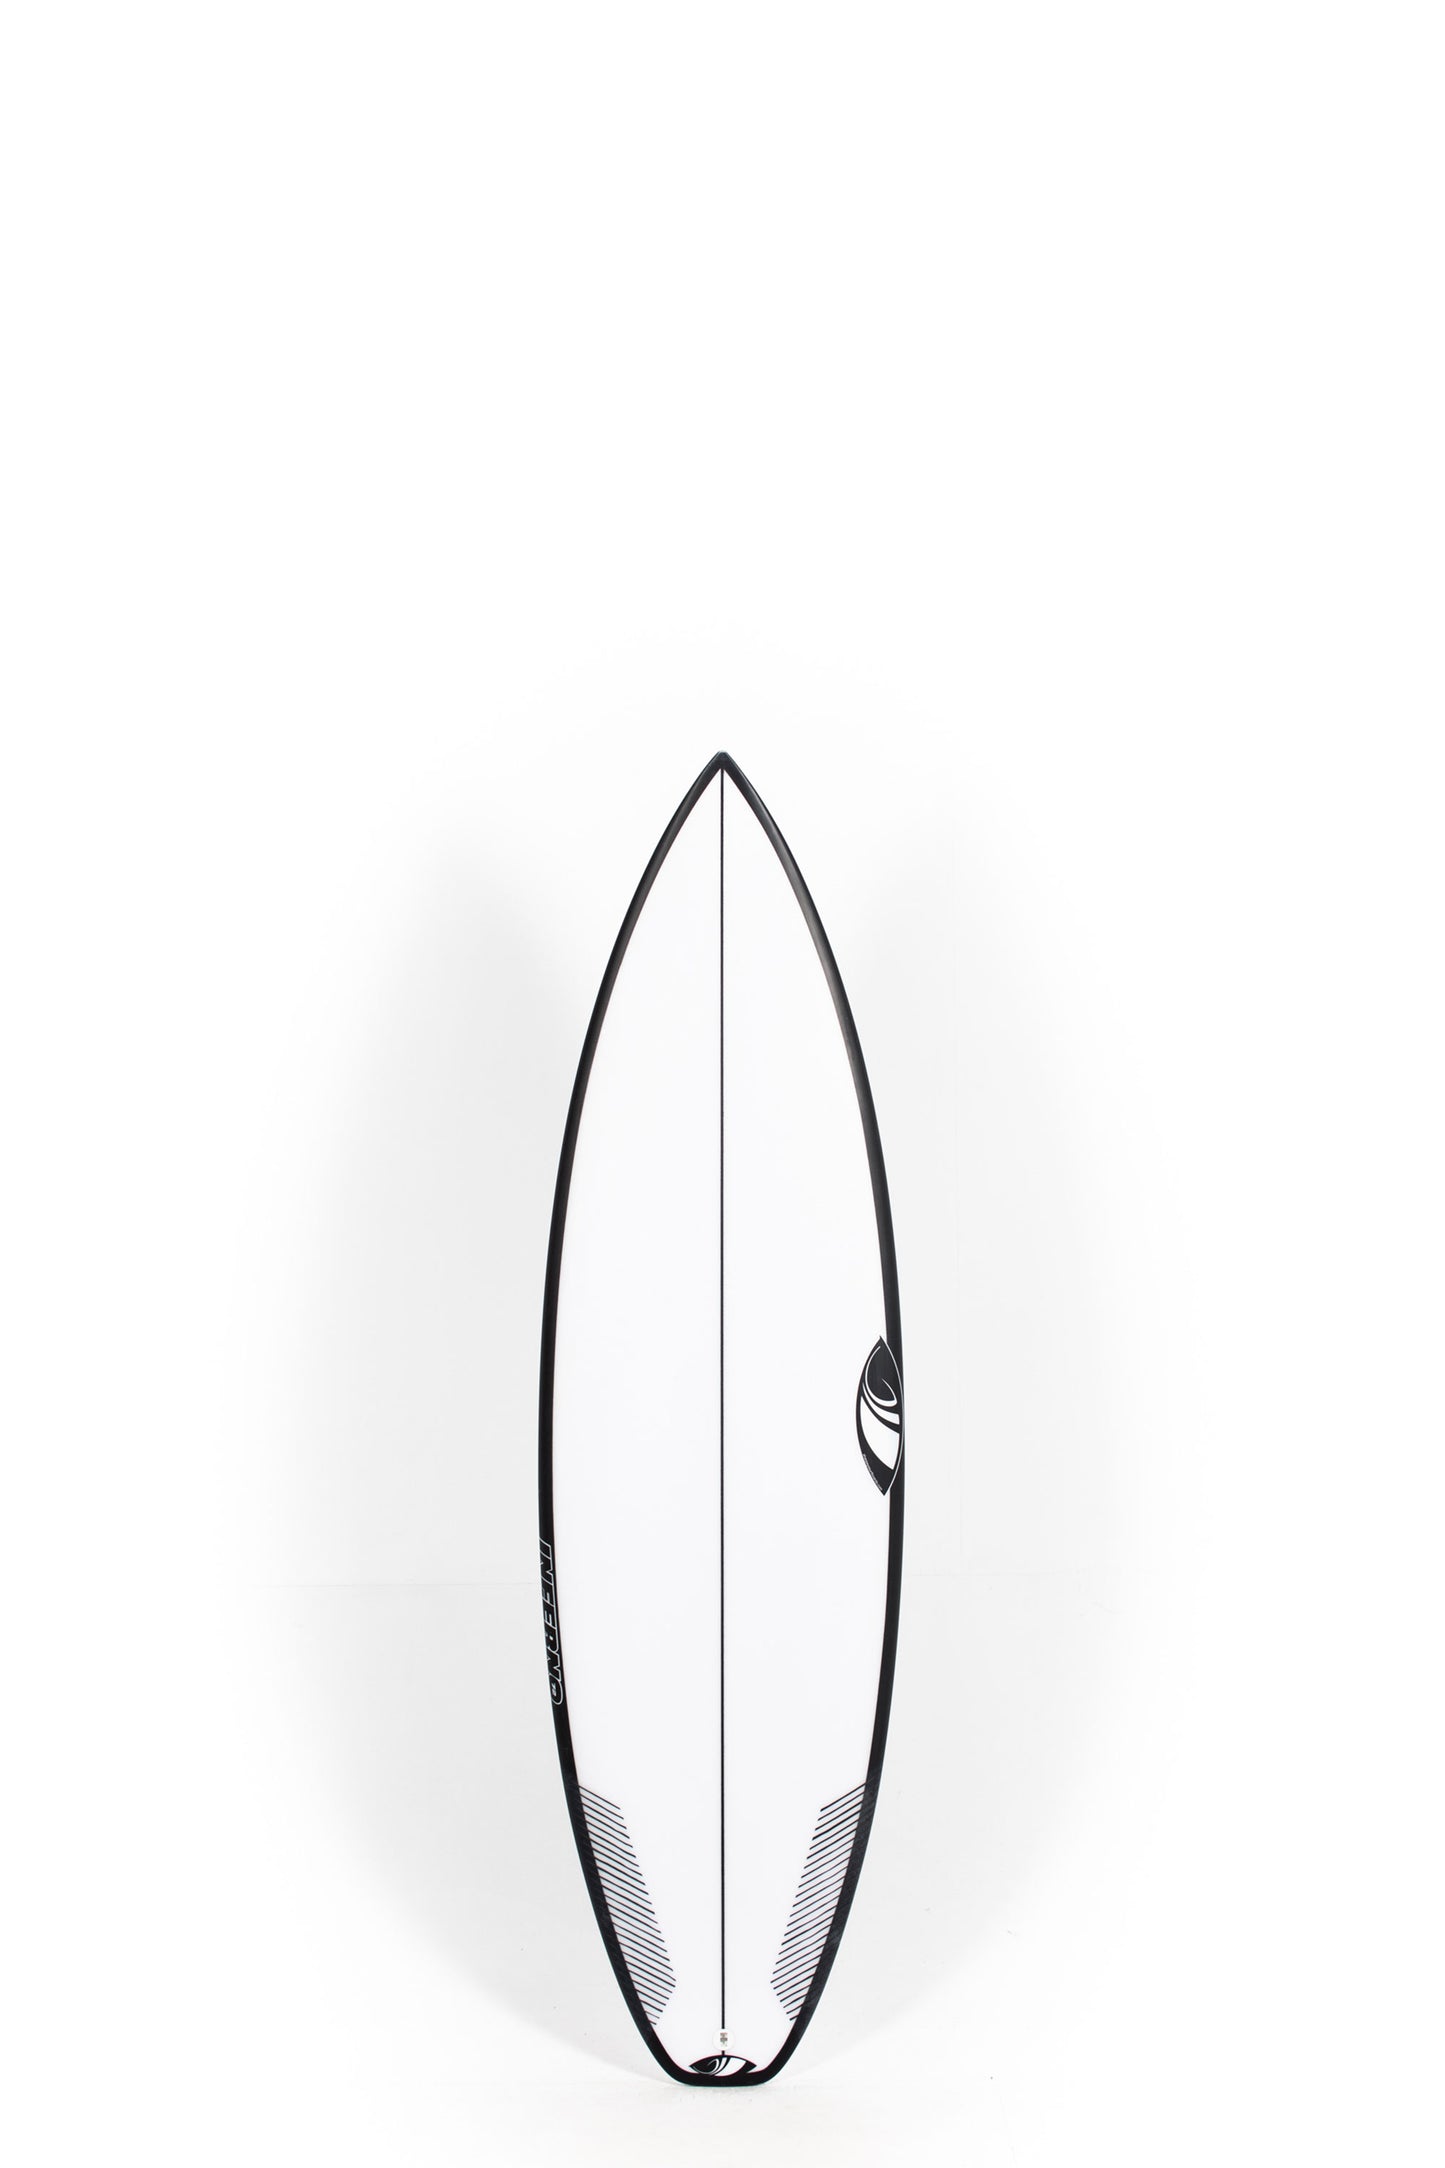 Sharpeye Surfboards - INFERNO 72 PRO by Marcio Zouvi 5'9